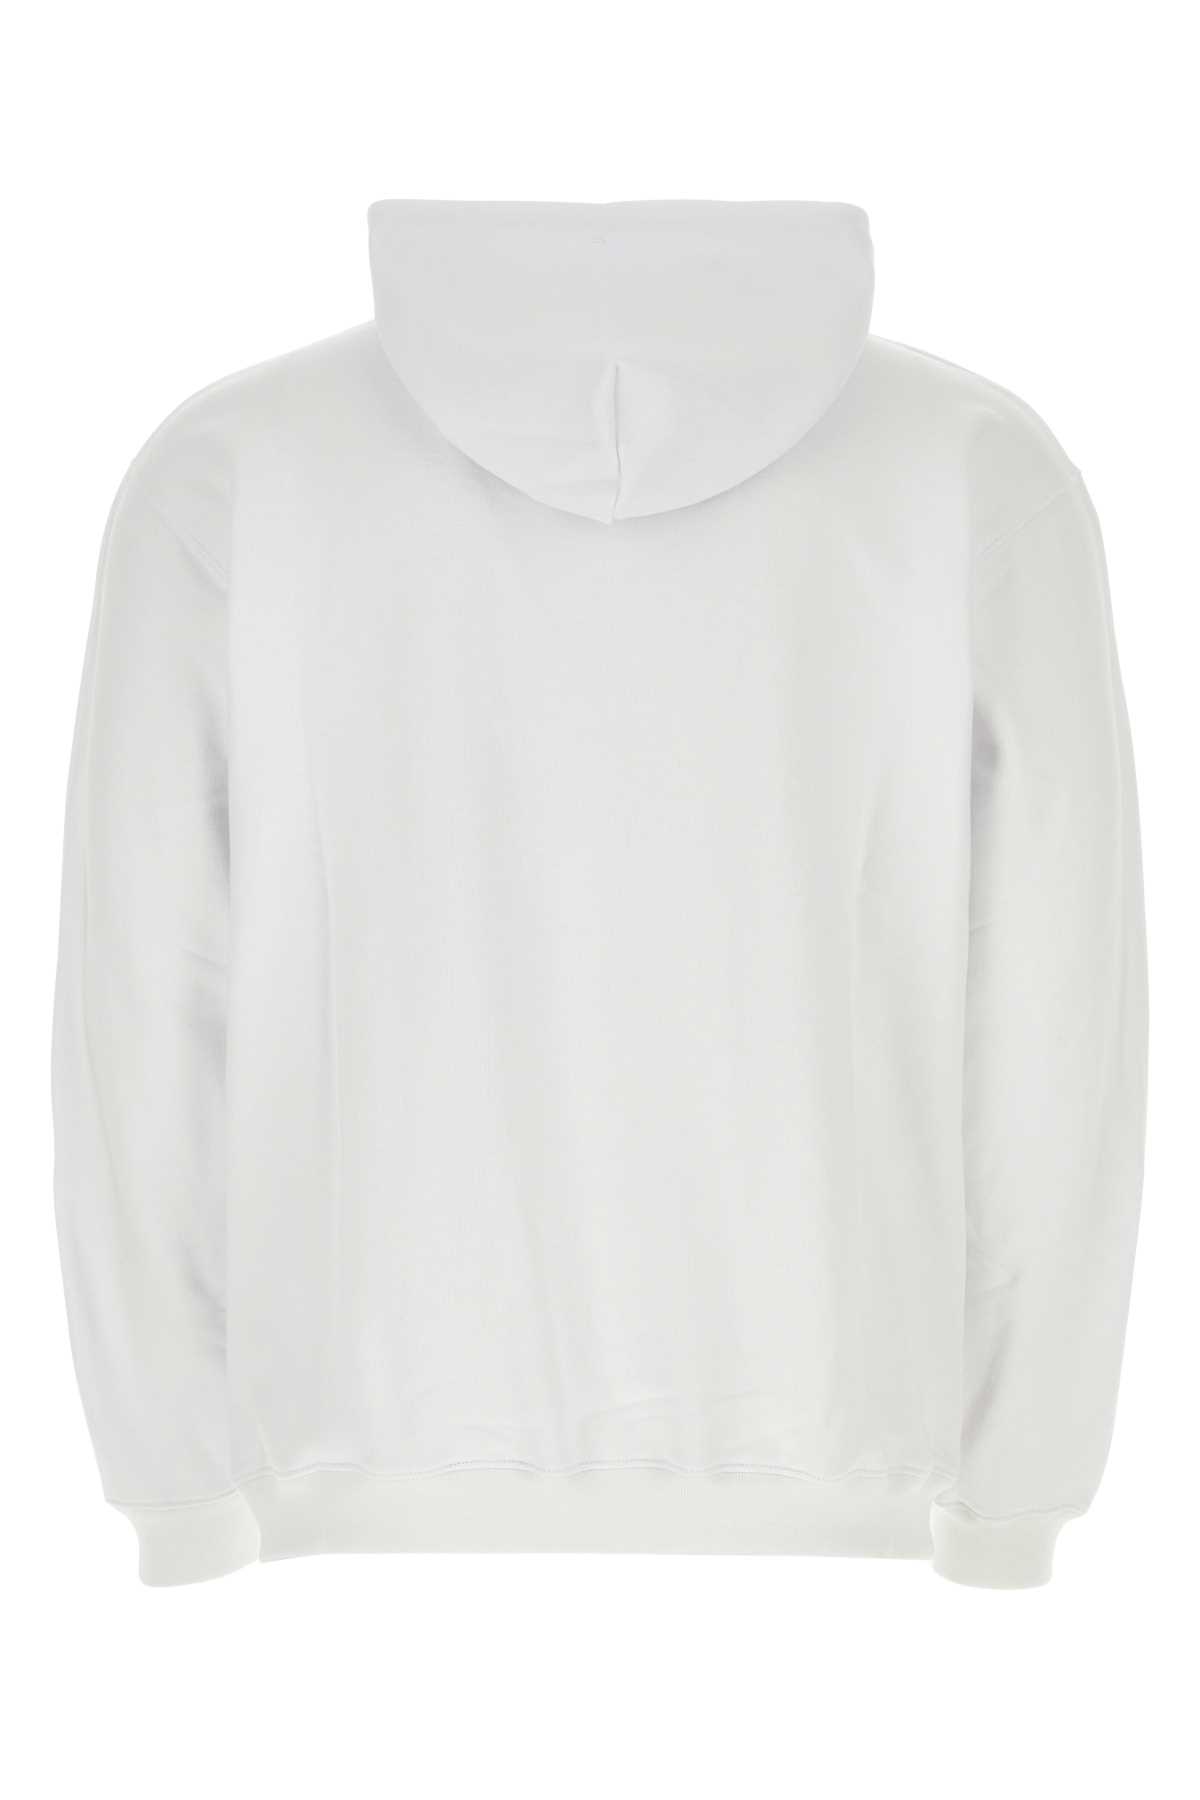 Shop Vtmnts White Cotton Blend Oversize Sweatshirt